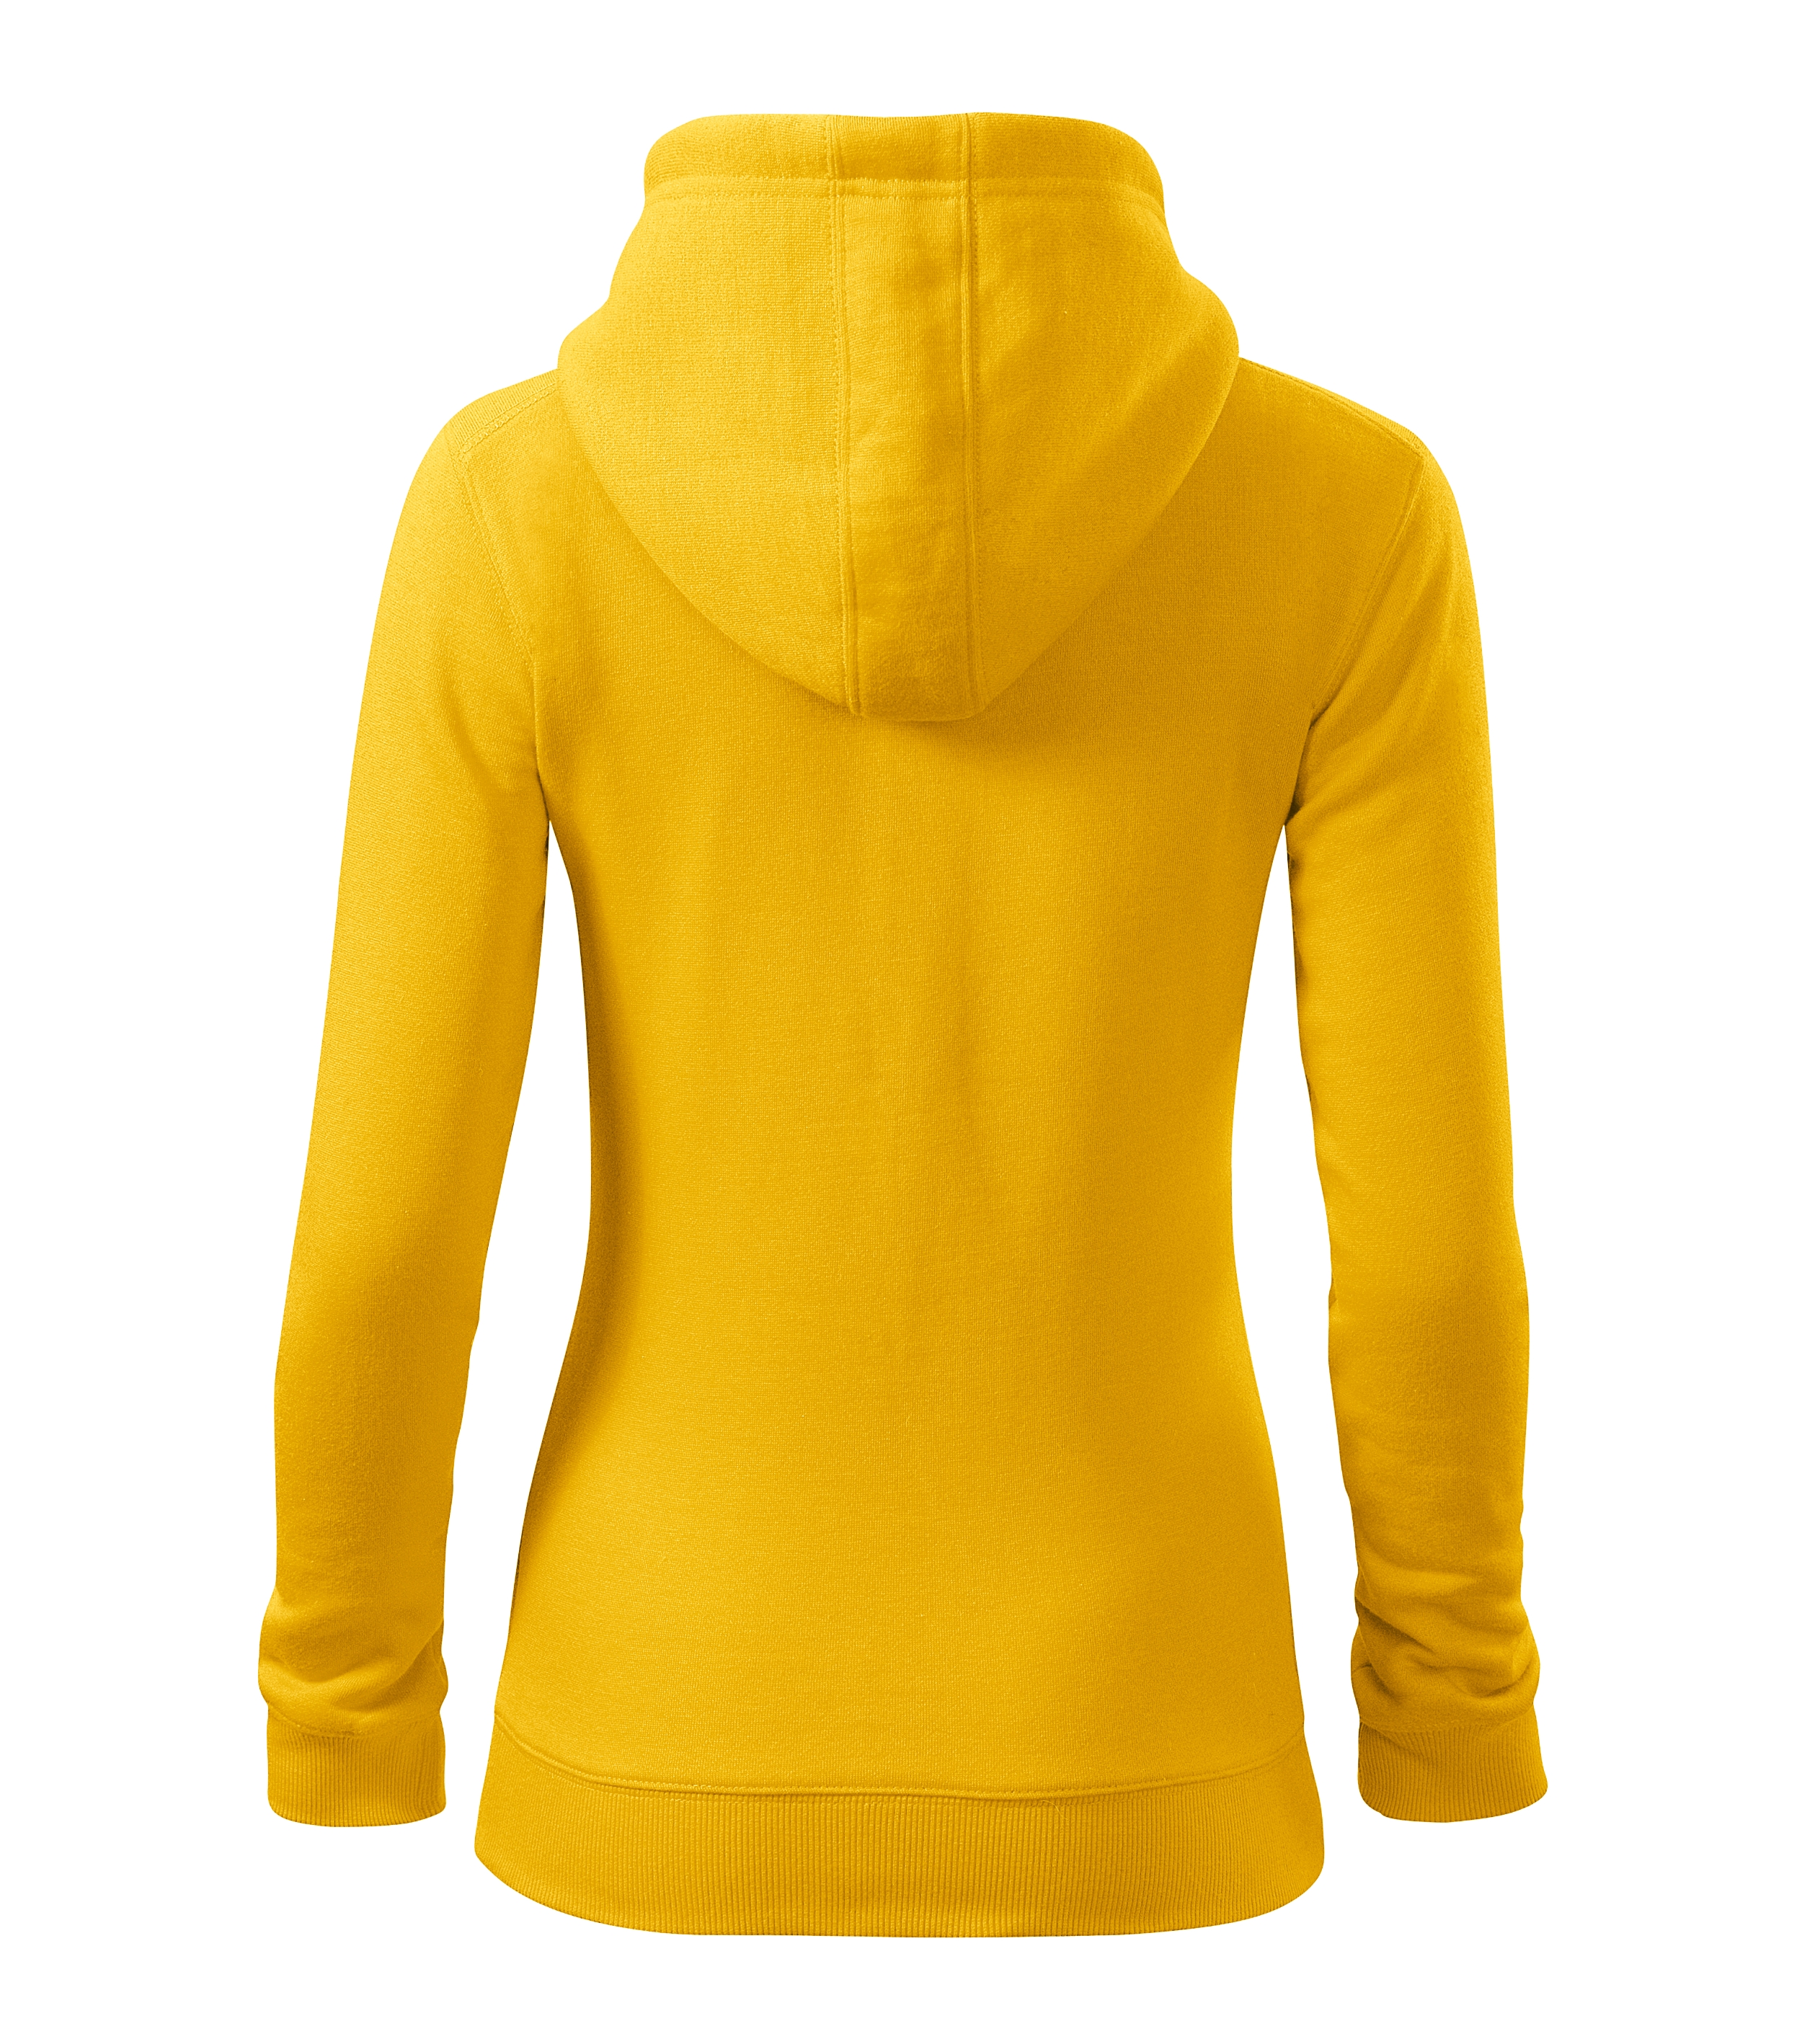 Trendy Zipper 411 Sweatshirt Damen Jacke Sweatshirts für Bekleidung Sweatjacke Kapuzenjacke Übergangsjacke